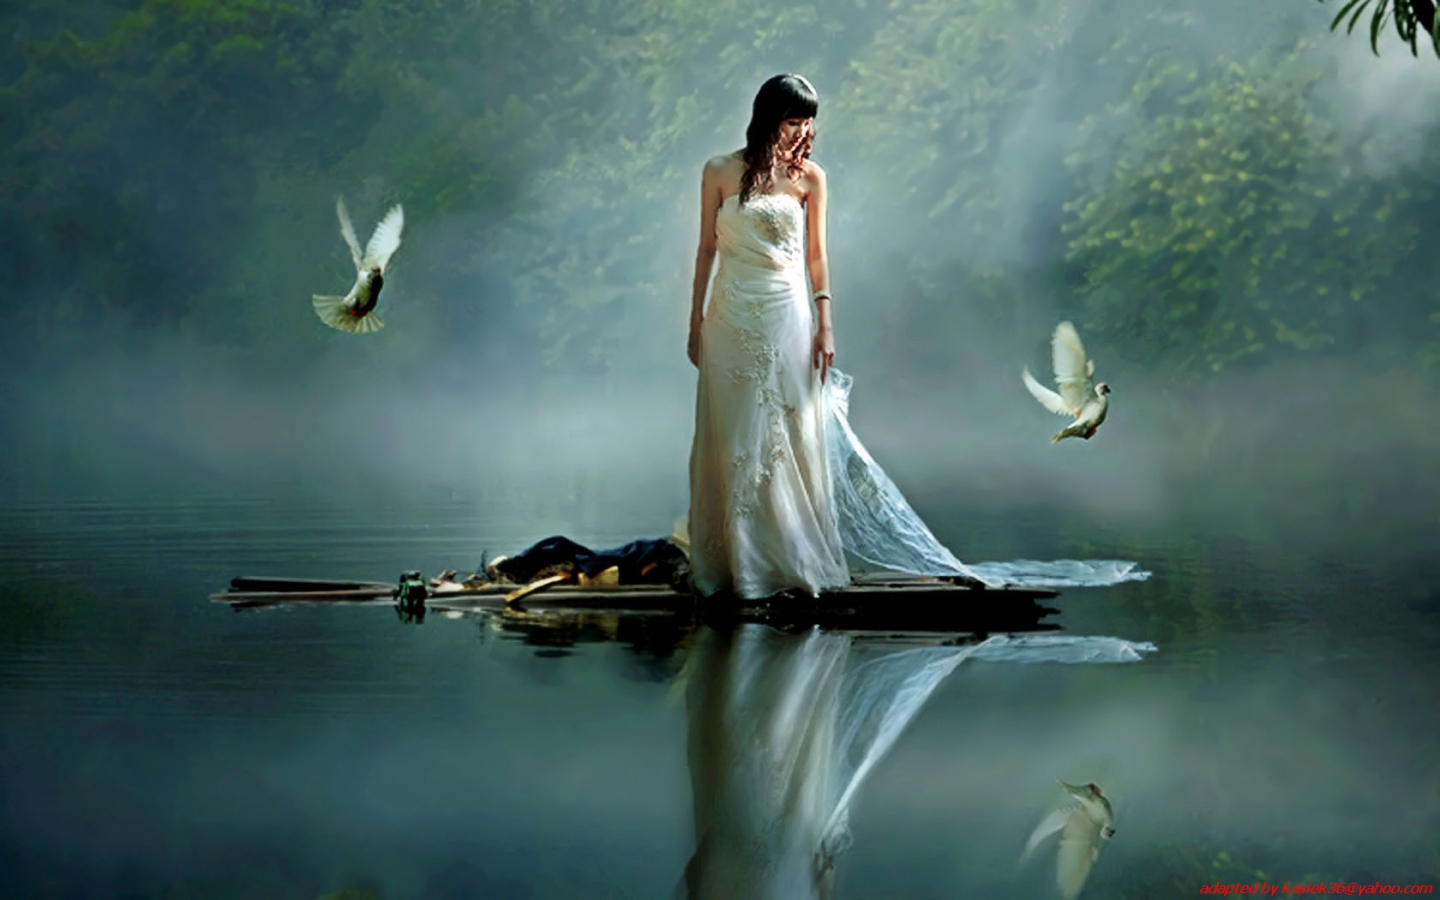 Отражение текста в воде. Отражение девушки в воде. Девушка над озером. Ангел воды. Девушка и озеро мистика.